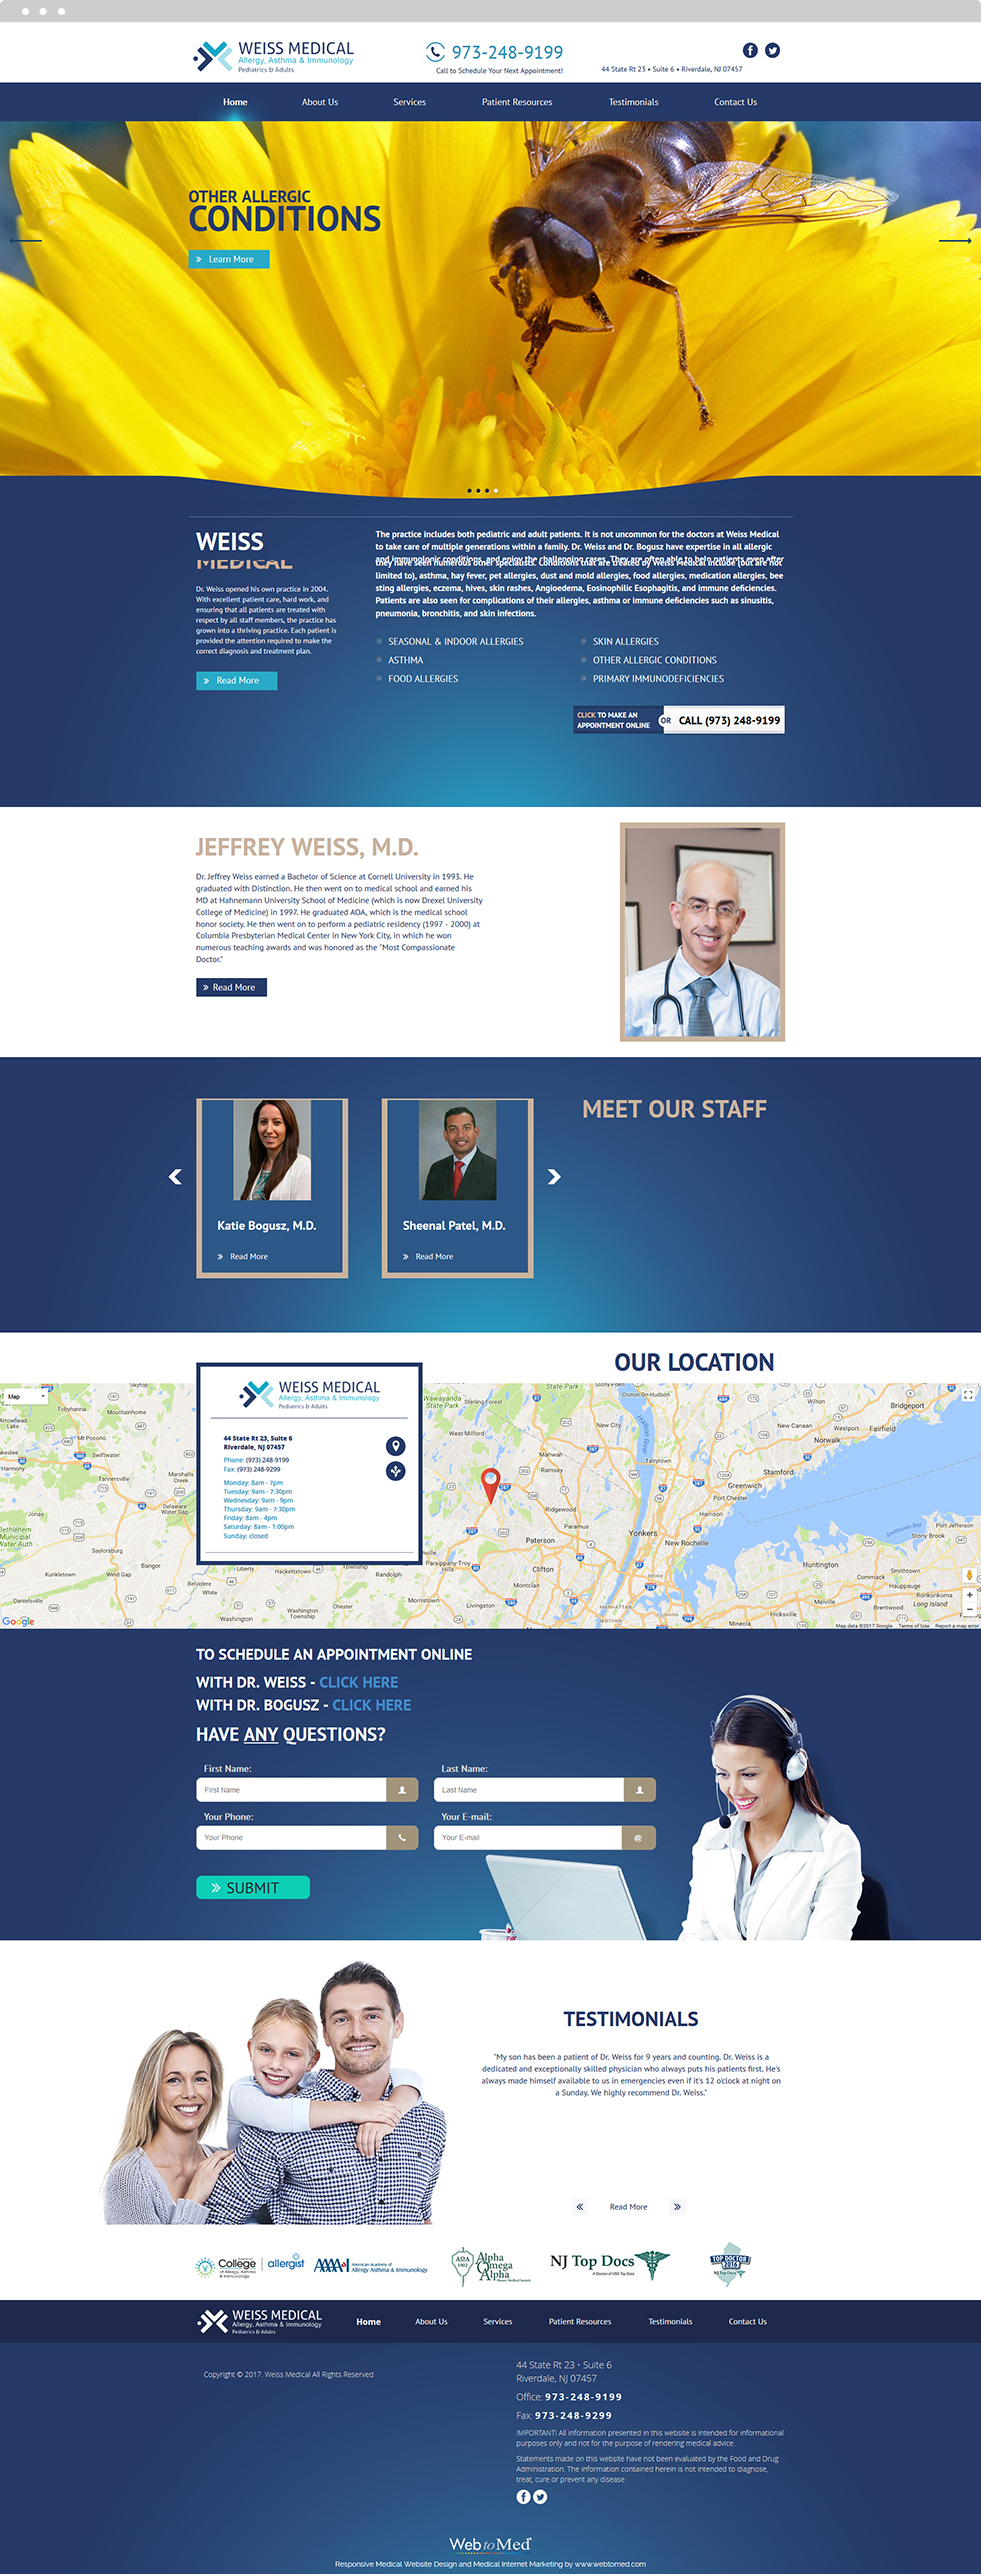 Allergy Website Design - Weiss Medical - Homepage